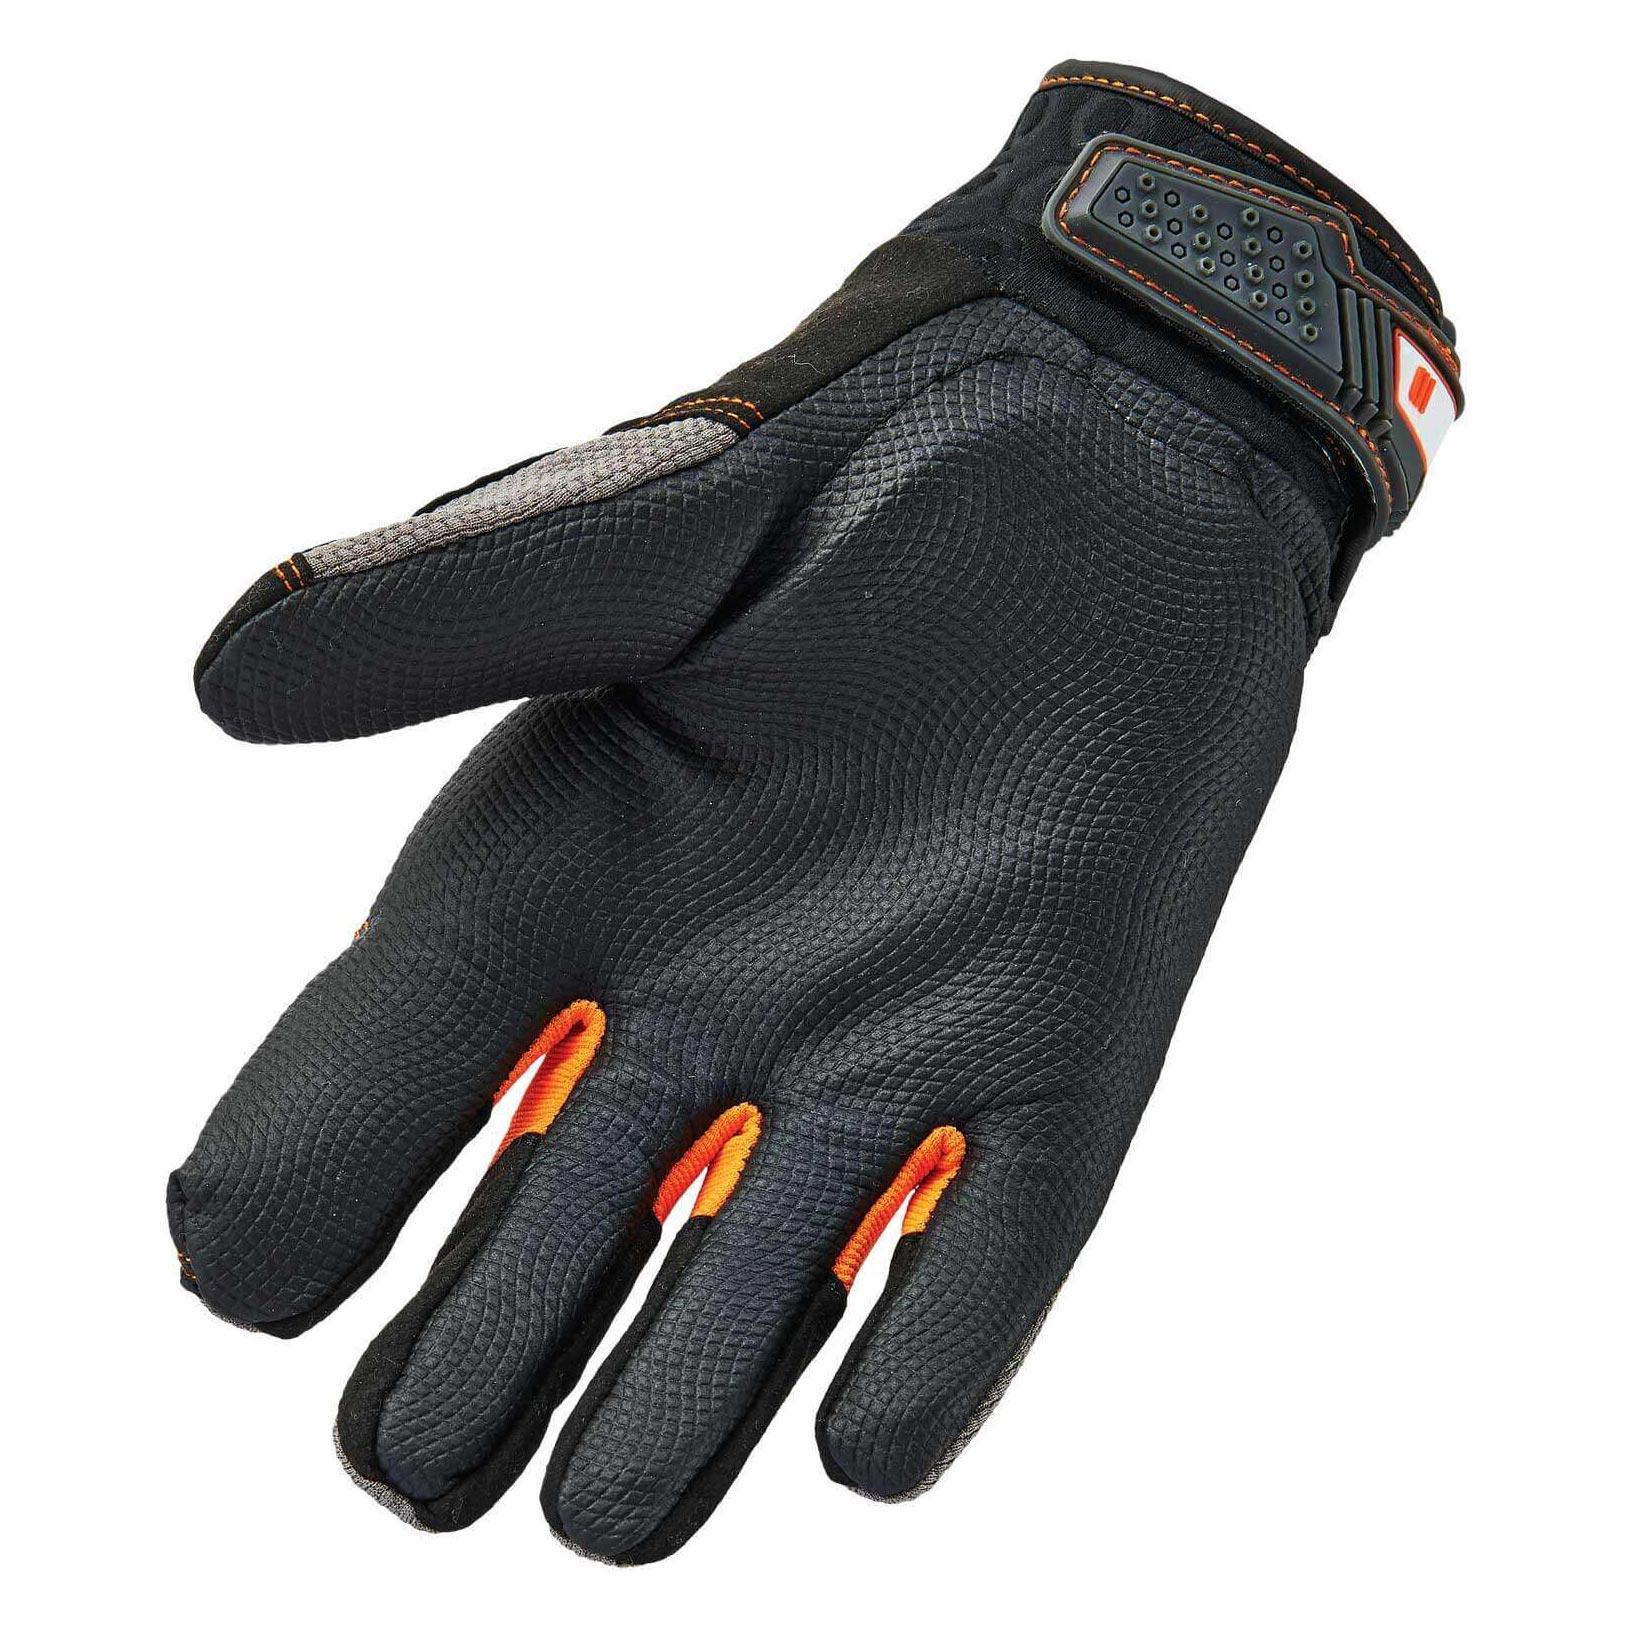 Ergodyne ProFlex 910 Half-Finger Impact Gloves + Wrist Support - Small Size  - Half Finger - Black - Anti-Vibration, Shock Resistant, Impact Resistant